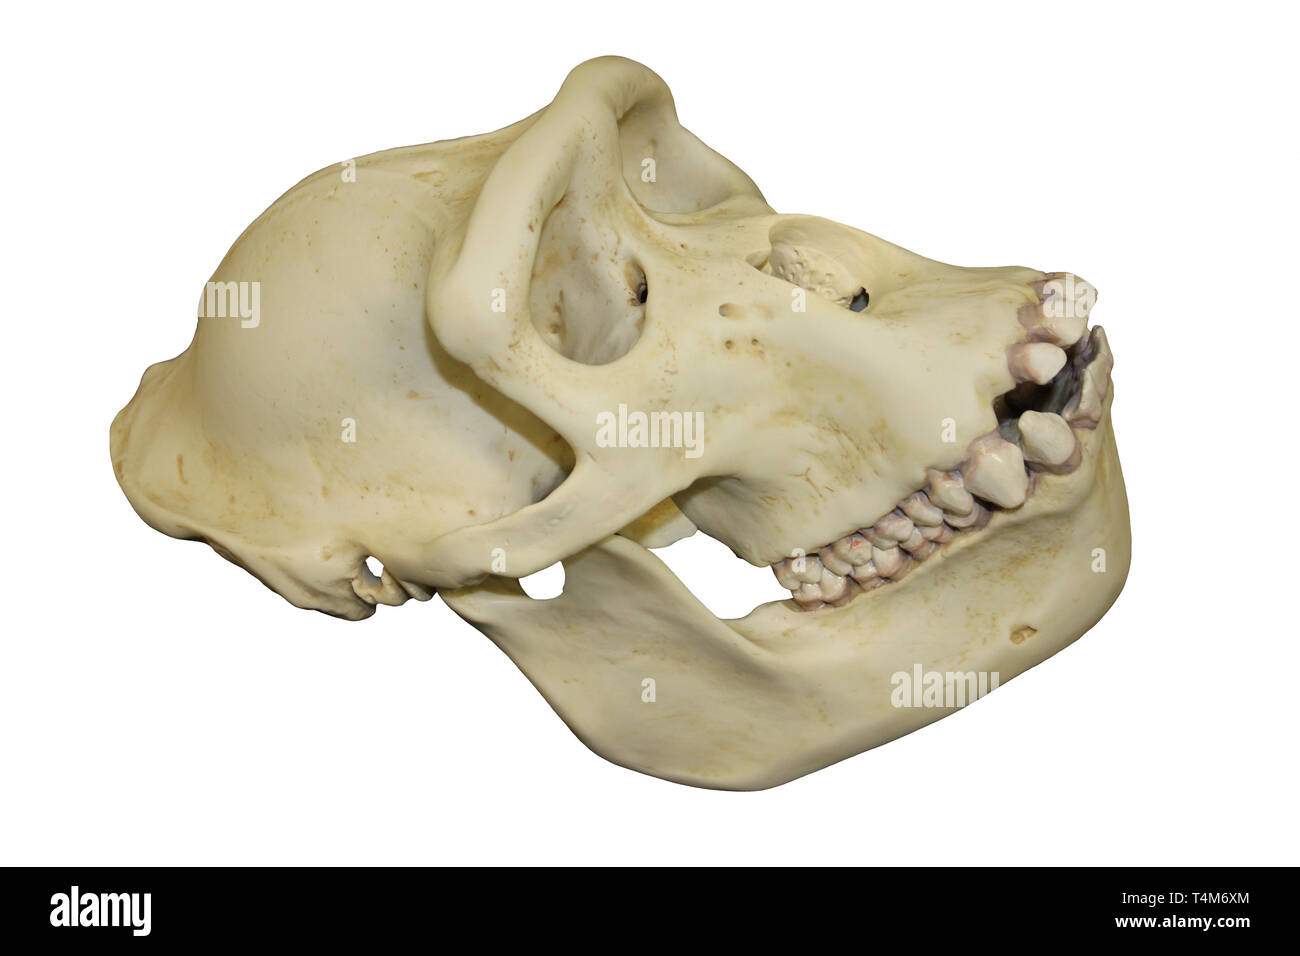 Female Gorilla Skull Stock Photo